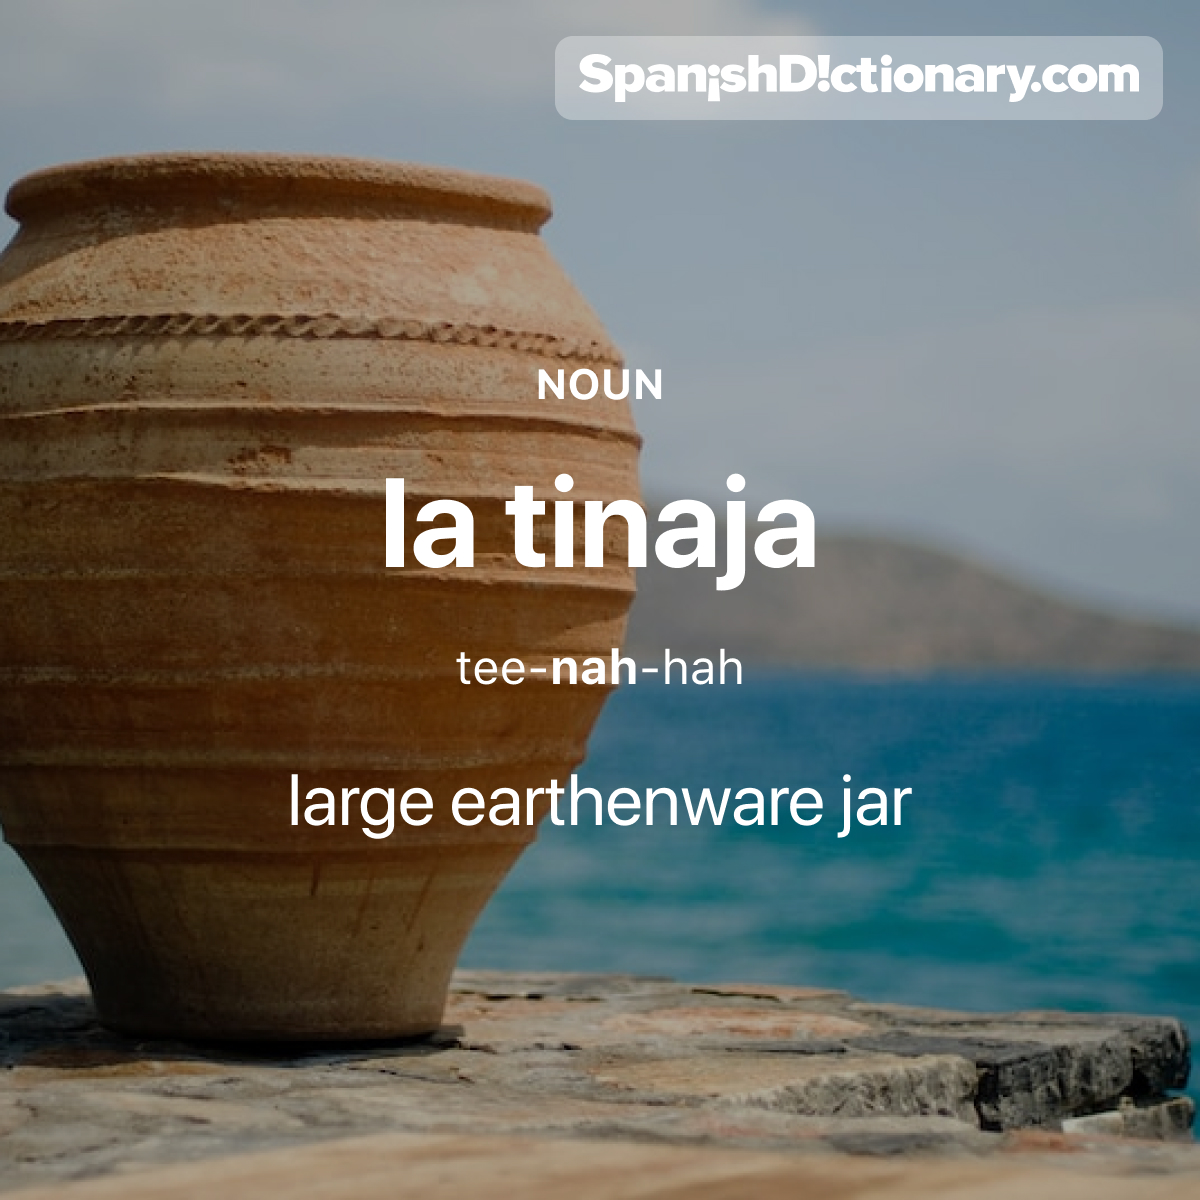 Today's #WordOfTheDay is 'tinaja.' ⚱️ For example: Los aldeanos guardan el aceite en tinajas.  - The villagers store the oil in large earthenware jars.
.
.
.
#EstudiaEspañol #StudySpanish #AprendeEspañol #LearnSpanish #Español #Spanish #LearningSpanish #PalabraDelDia #tinaja